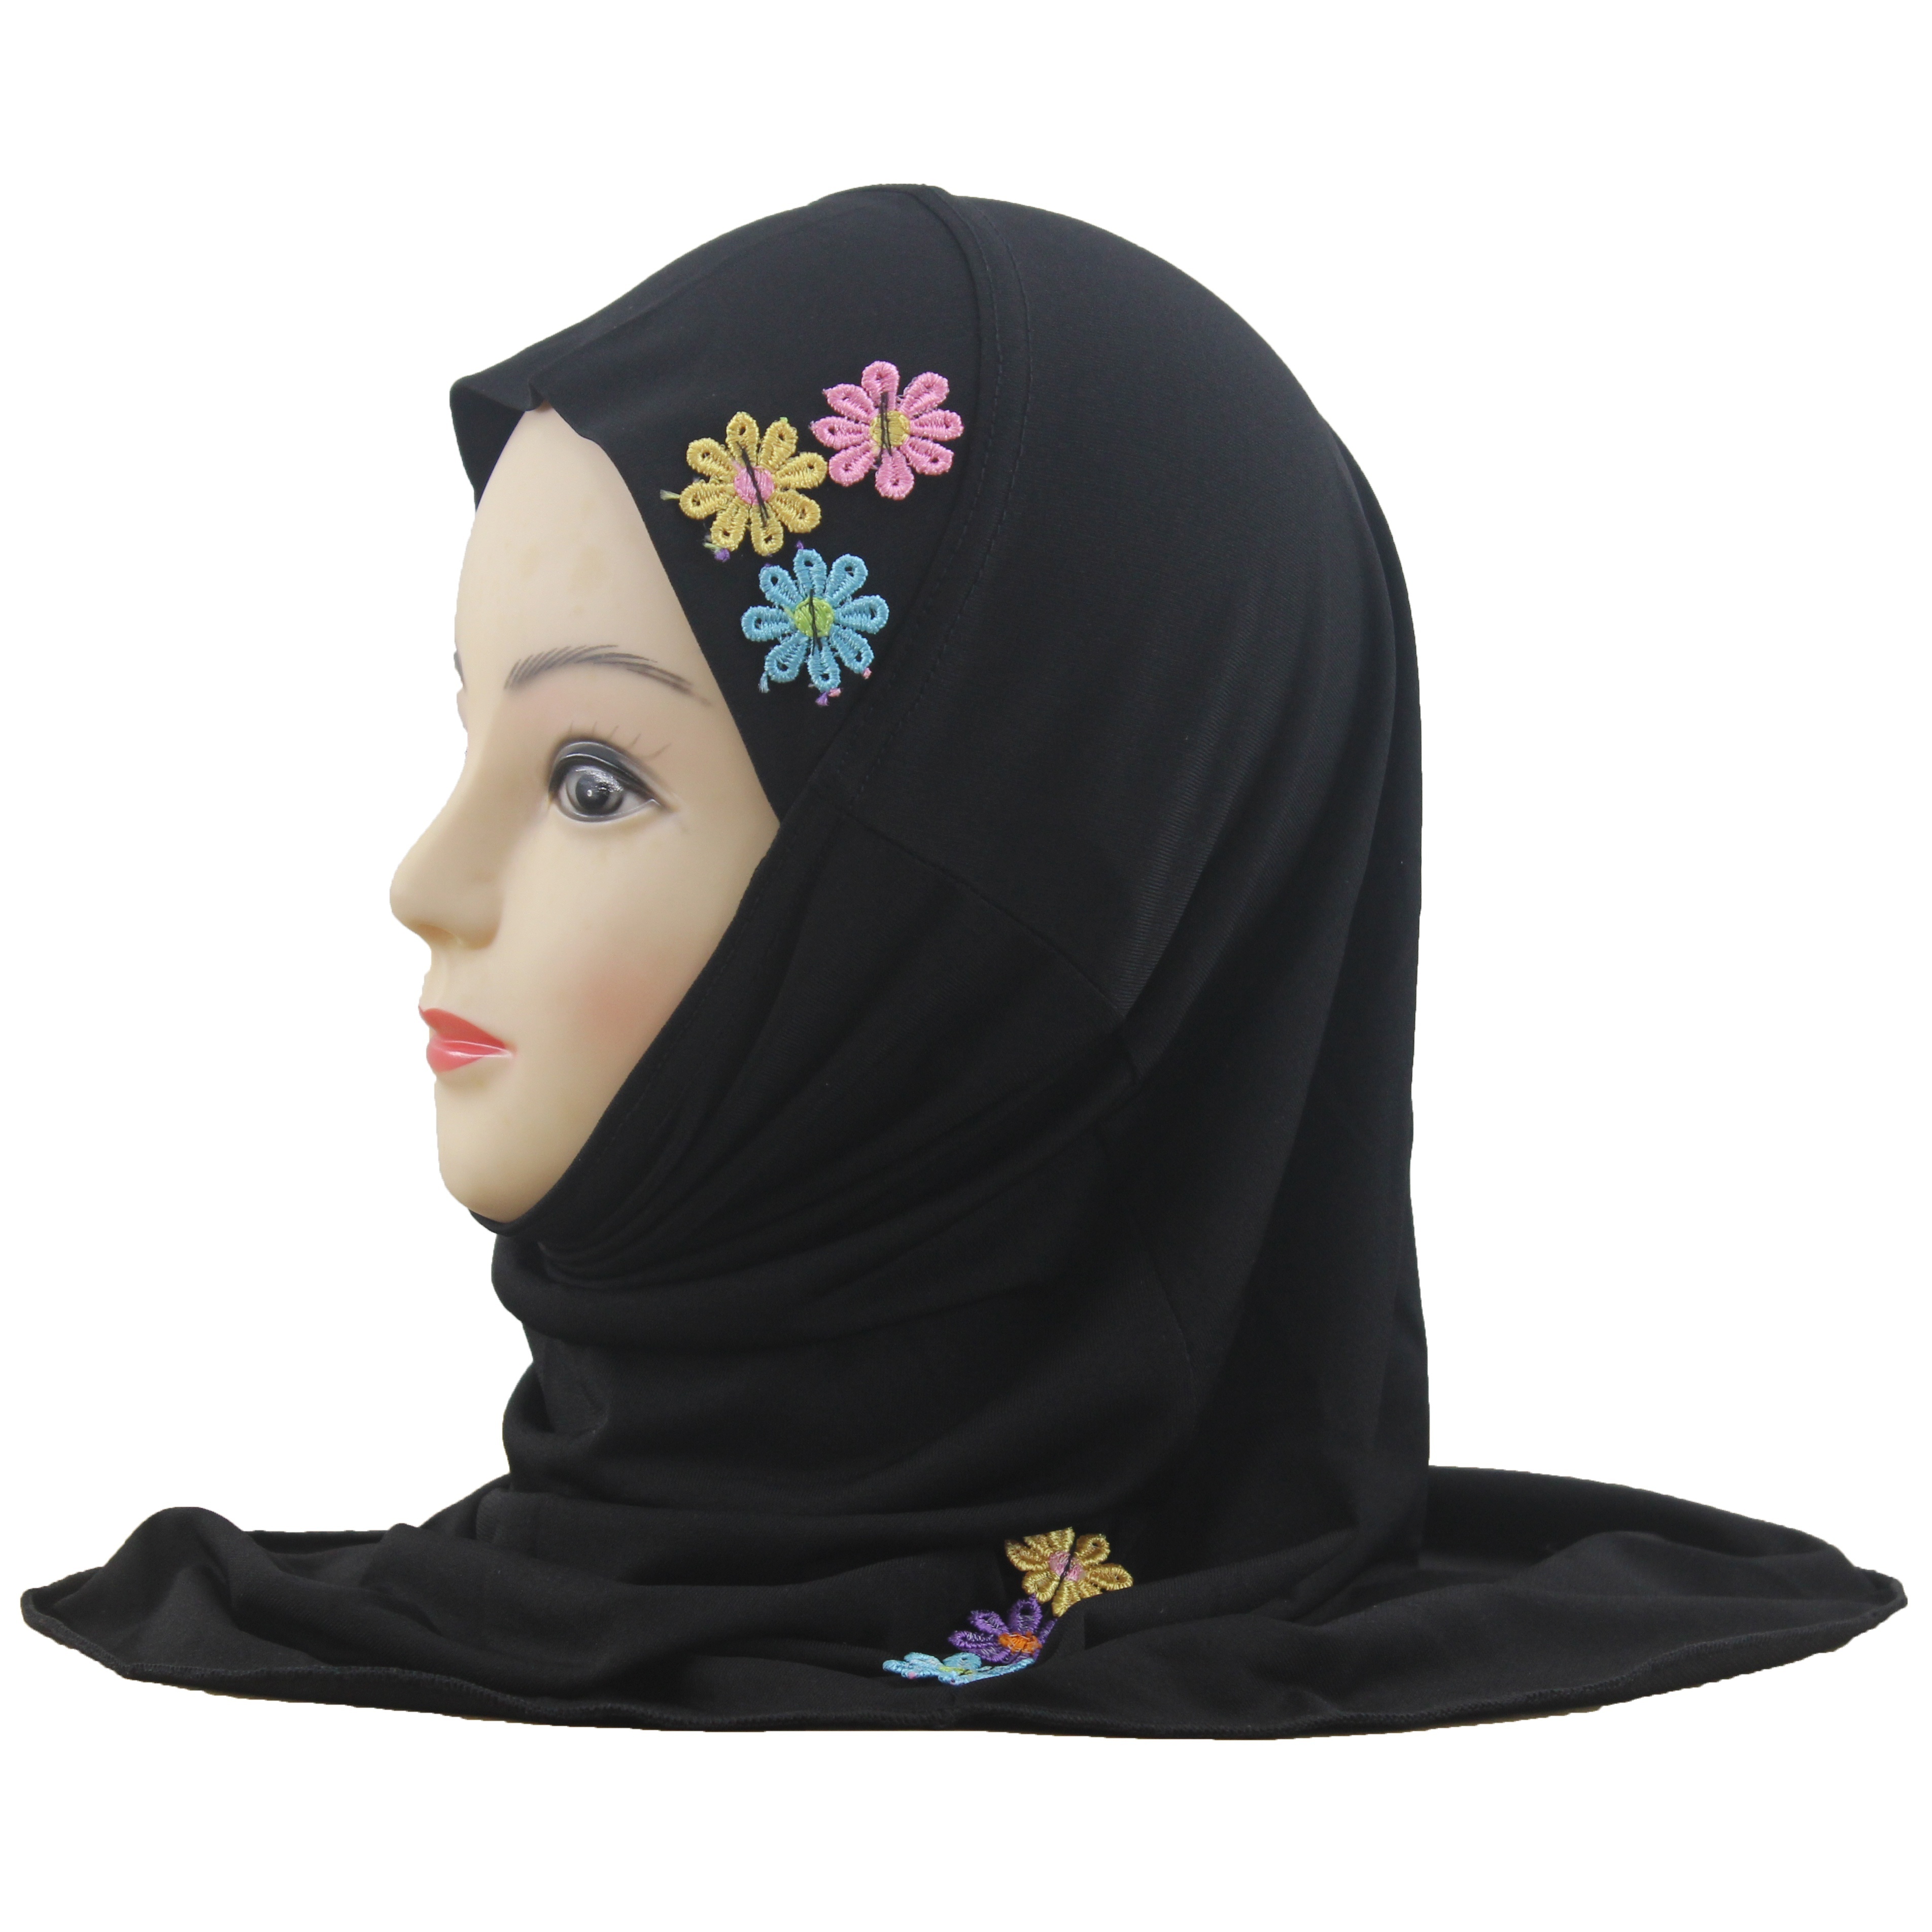 Shawl Hangers Organizer for Muslimah Hijab Tudung Ladies Mask